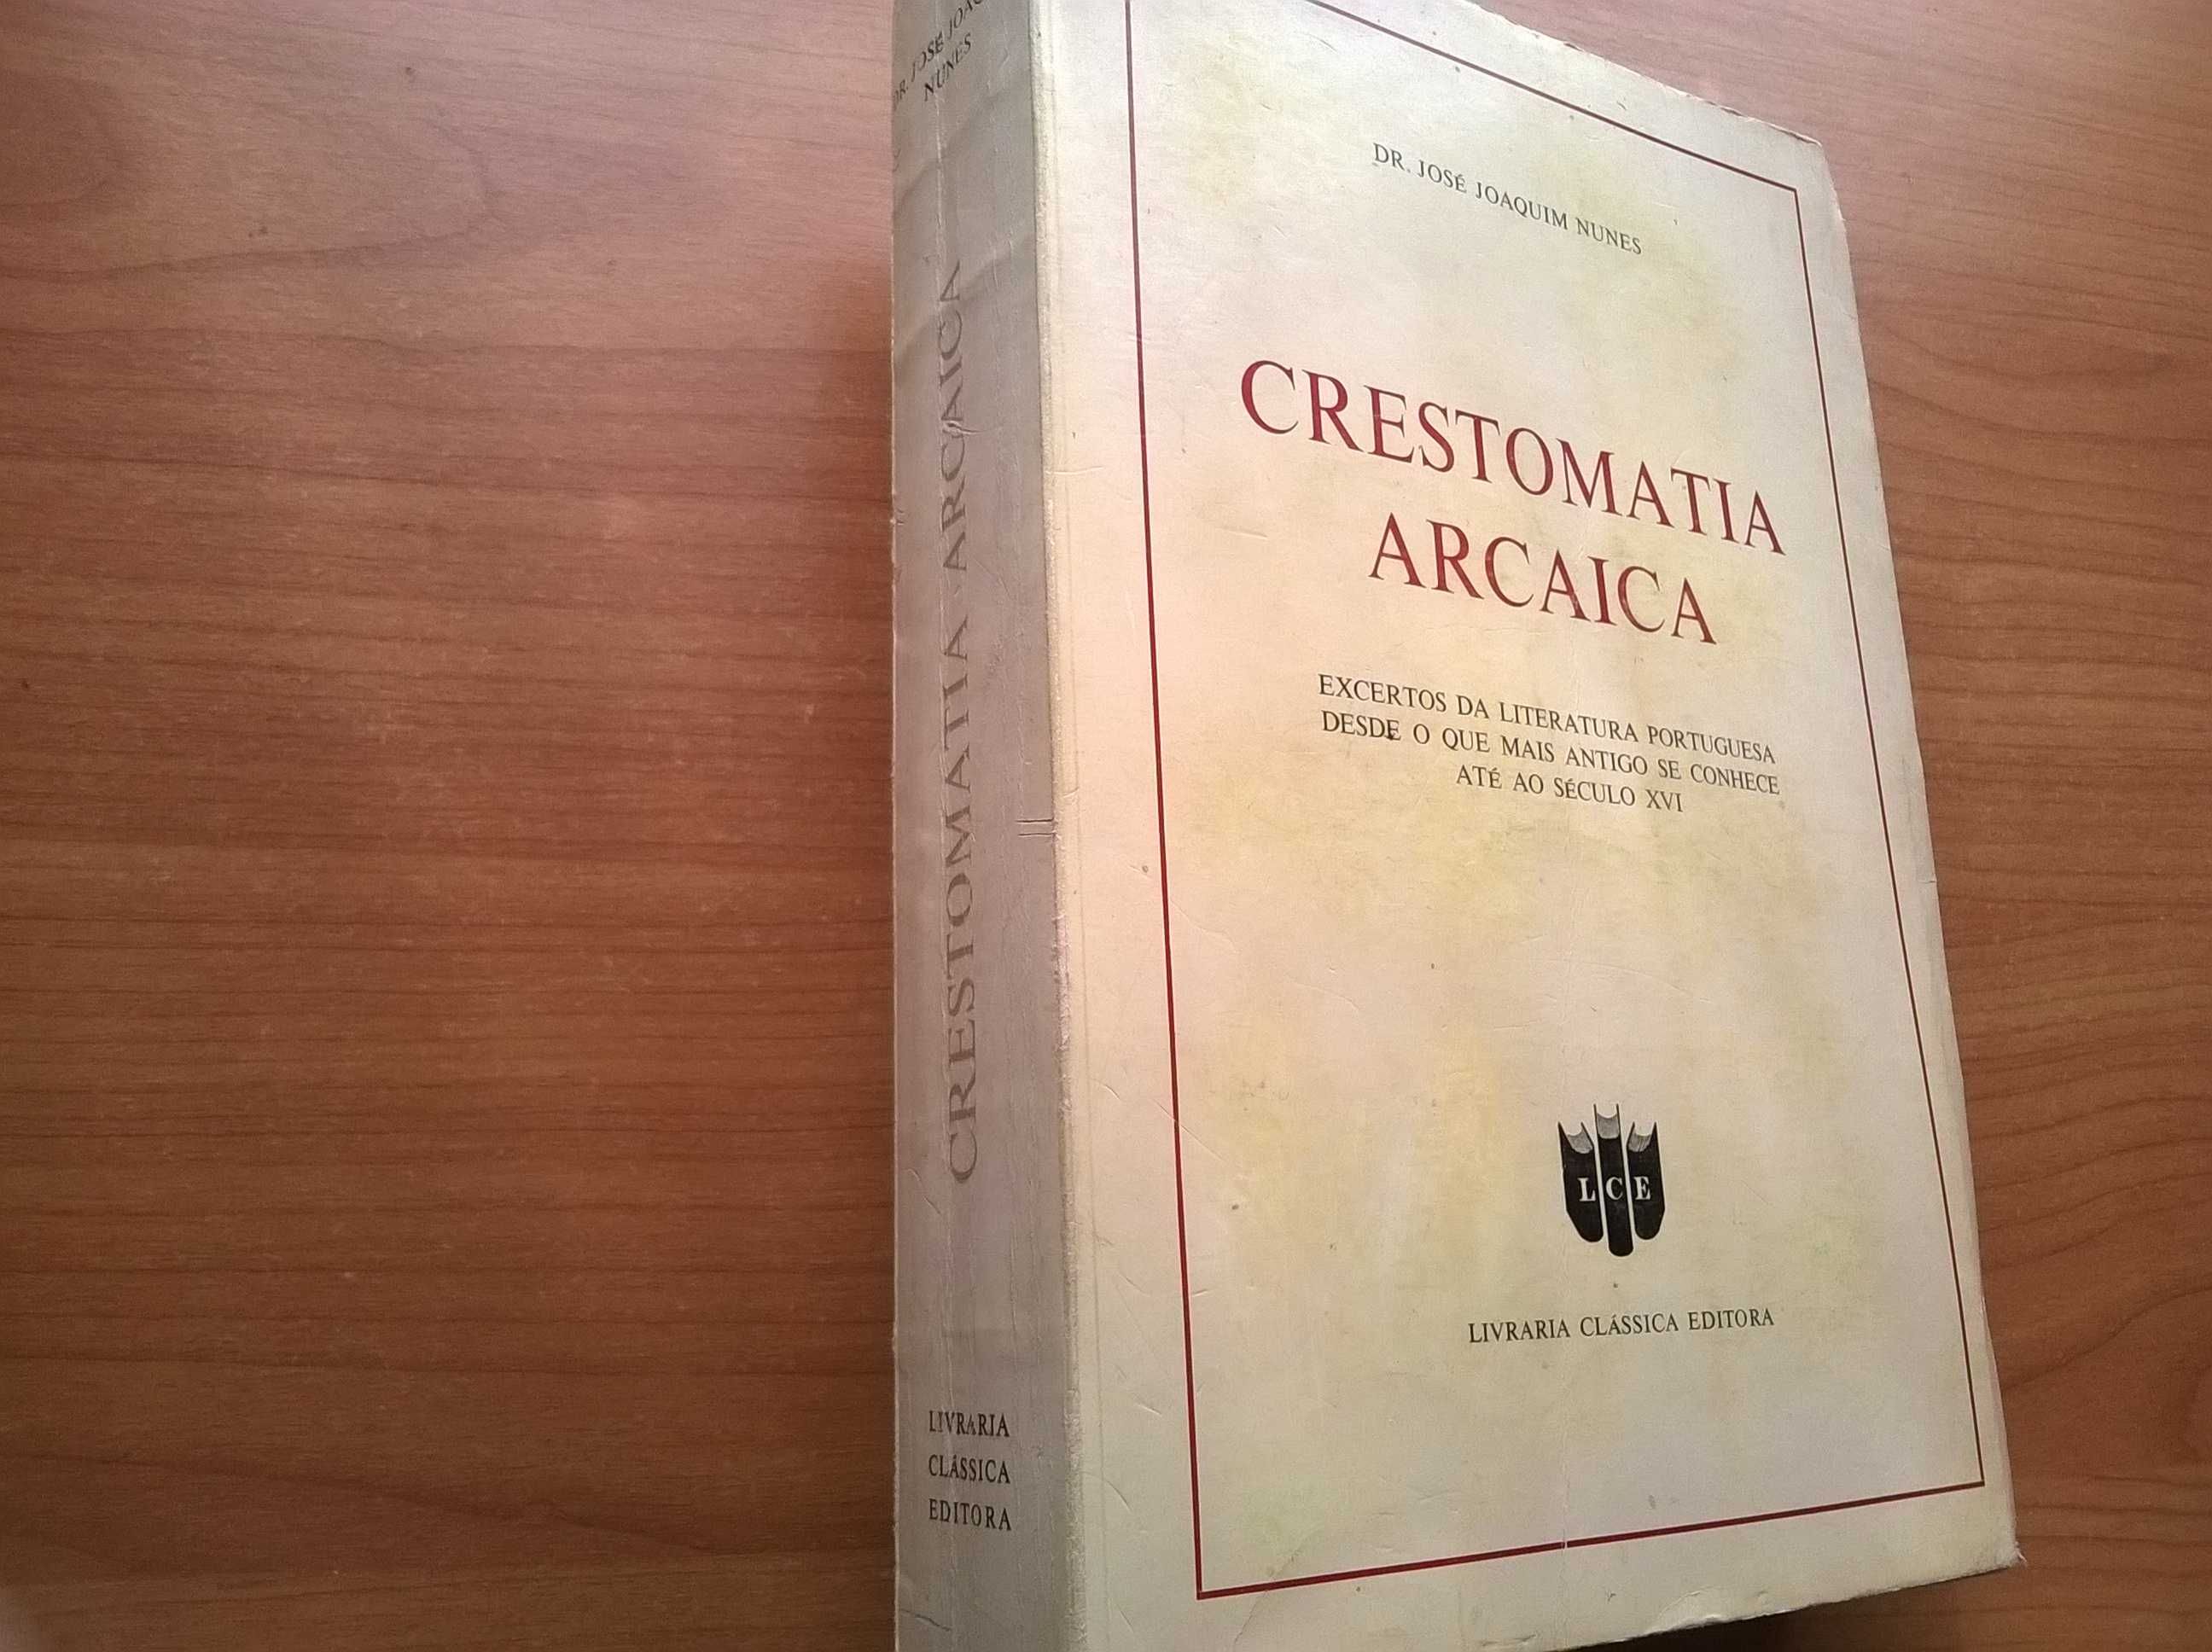 Crestomatia Arcaica - Dr. José Joaquim Nunes